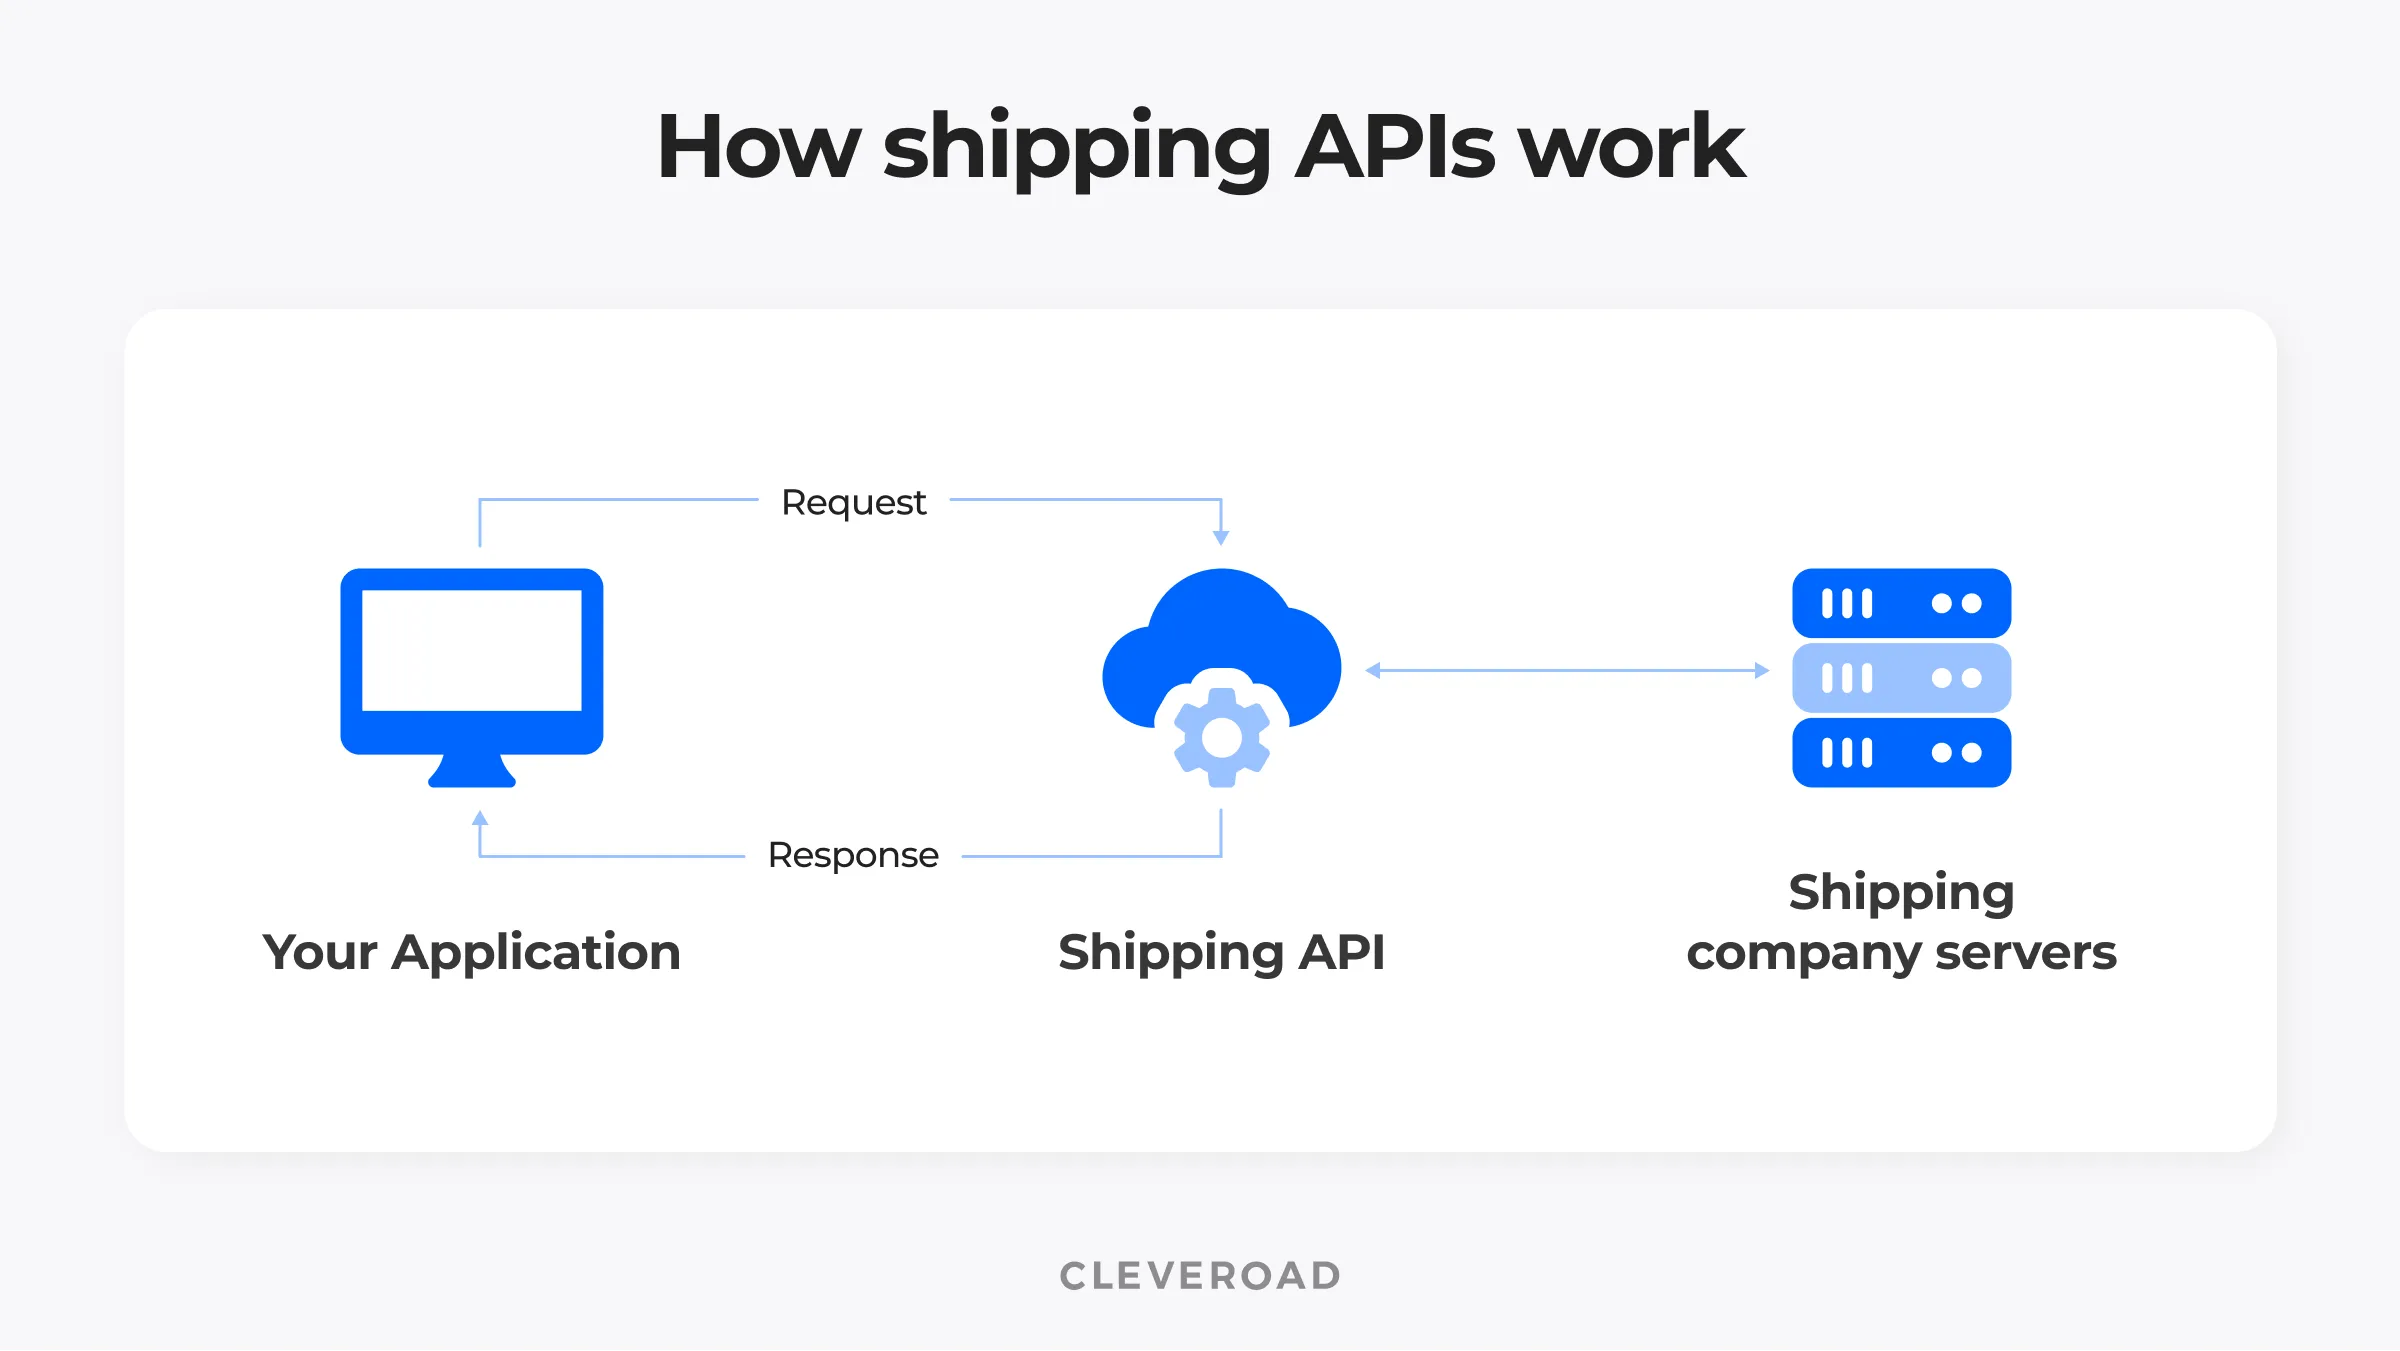 Shipping API operation